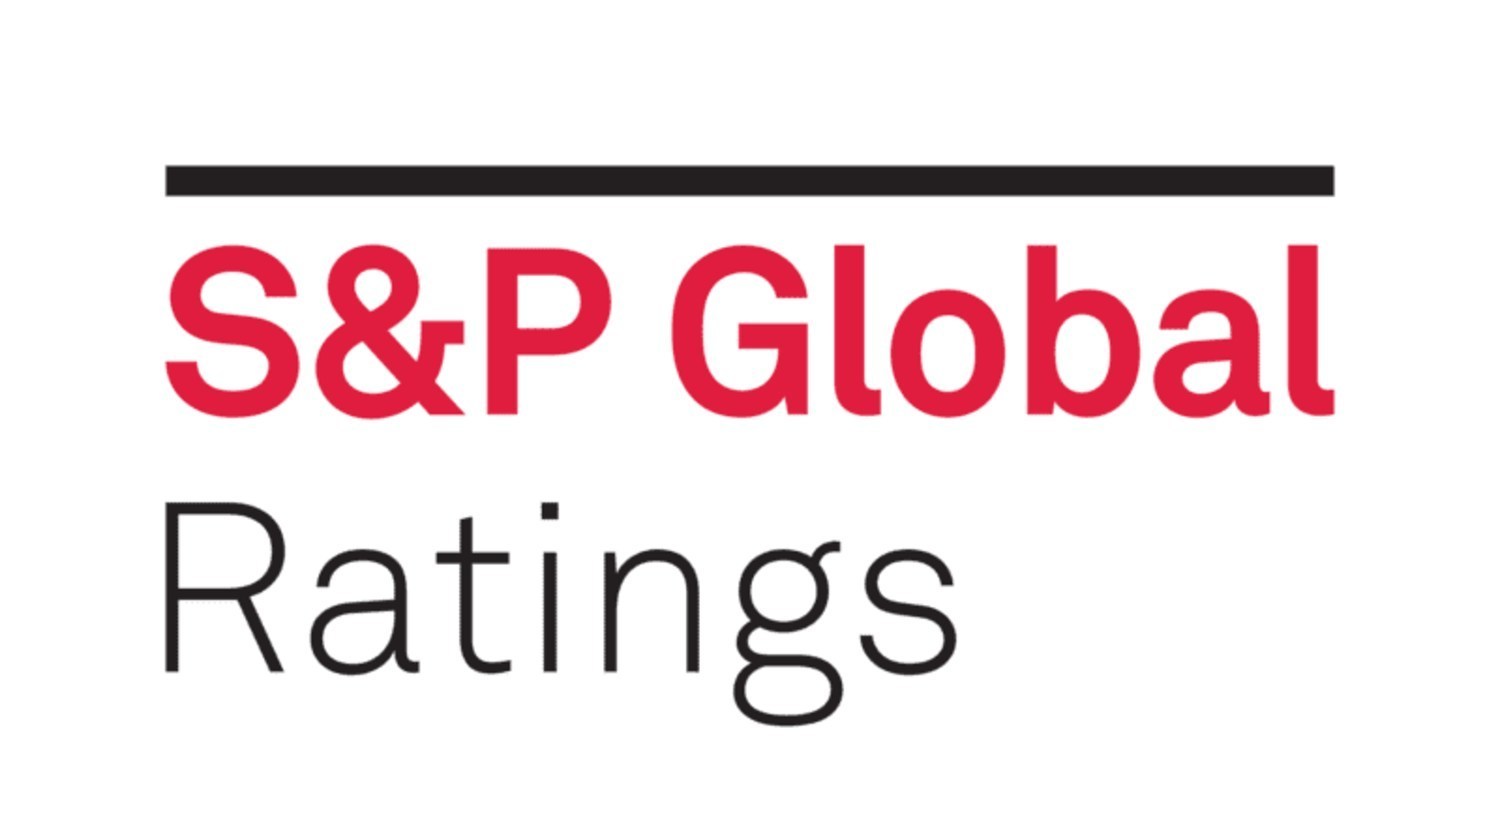 S&P Global Ratings (PRNewsfoto/S&P Global)